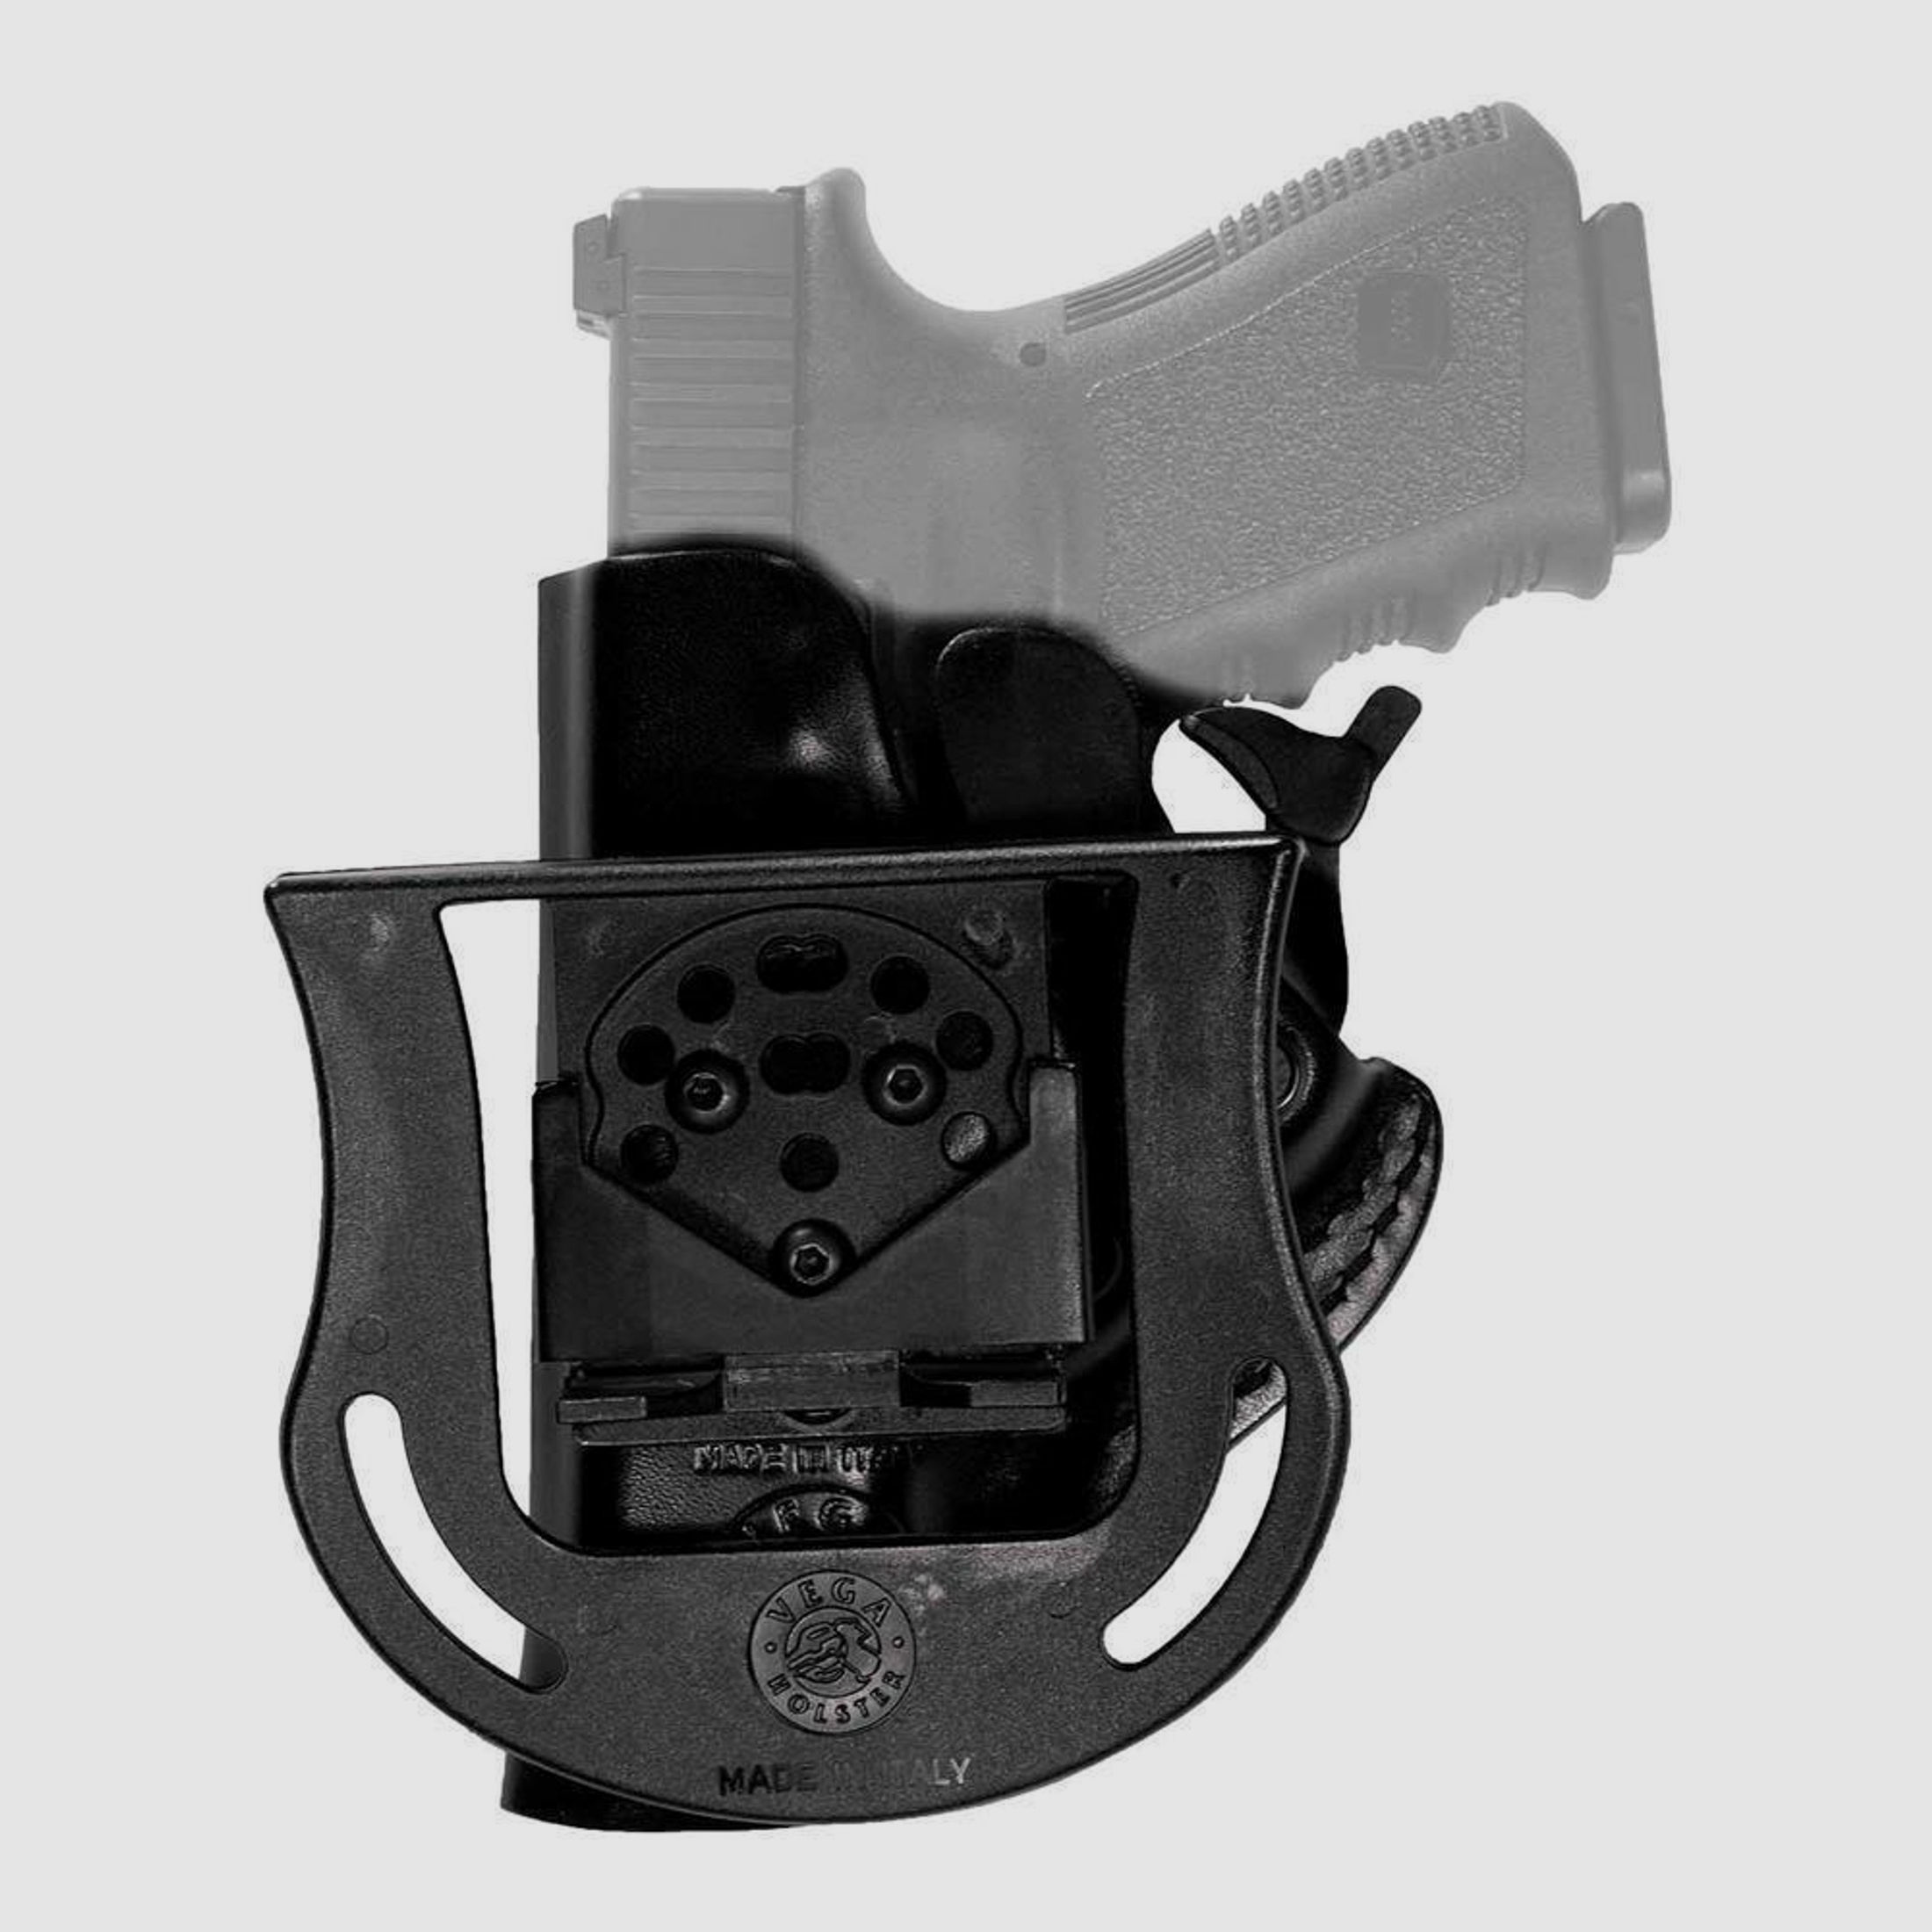 Paddelholster mit VEGA PULL SIDE System Beretta PX4 Compact/Storm,Ruger 89/P85 Schwarz Linkshänder